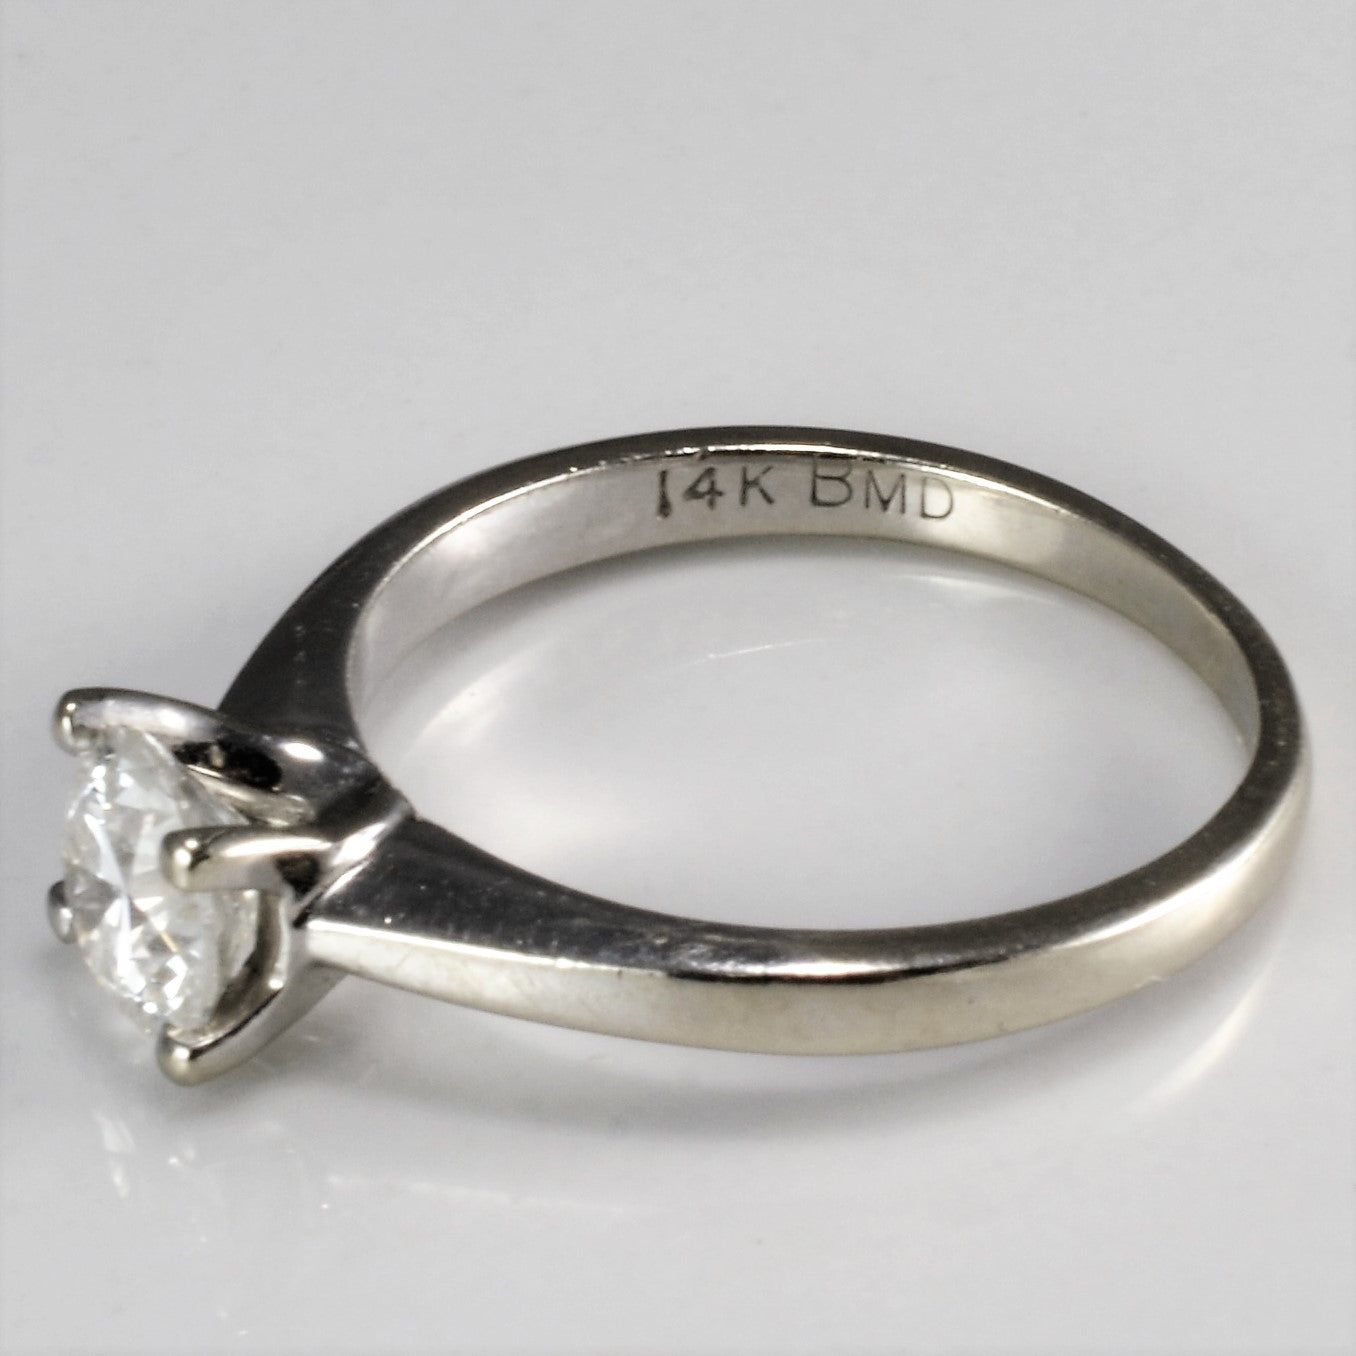 Prong Set Solitaire Diamond Engagement Ring | 0.70 ct, SZ 5.5 |